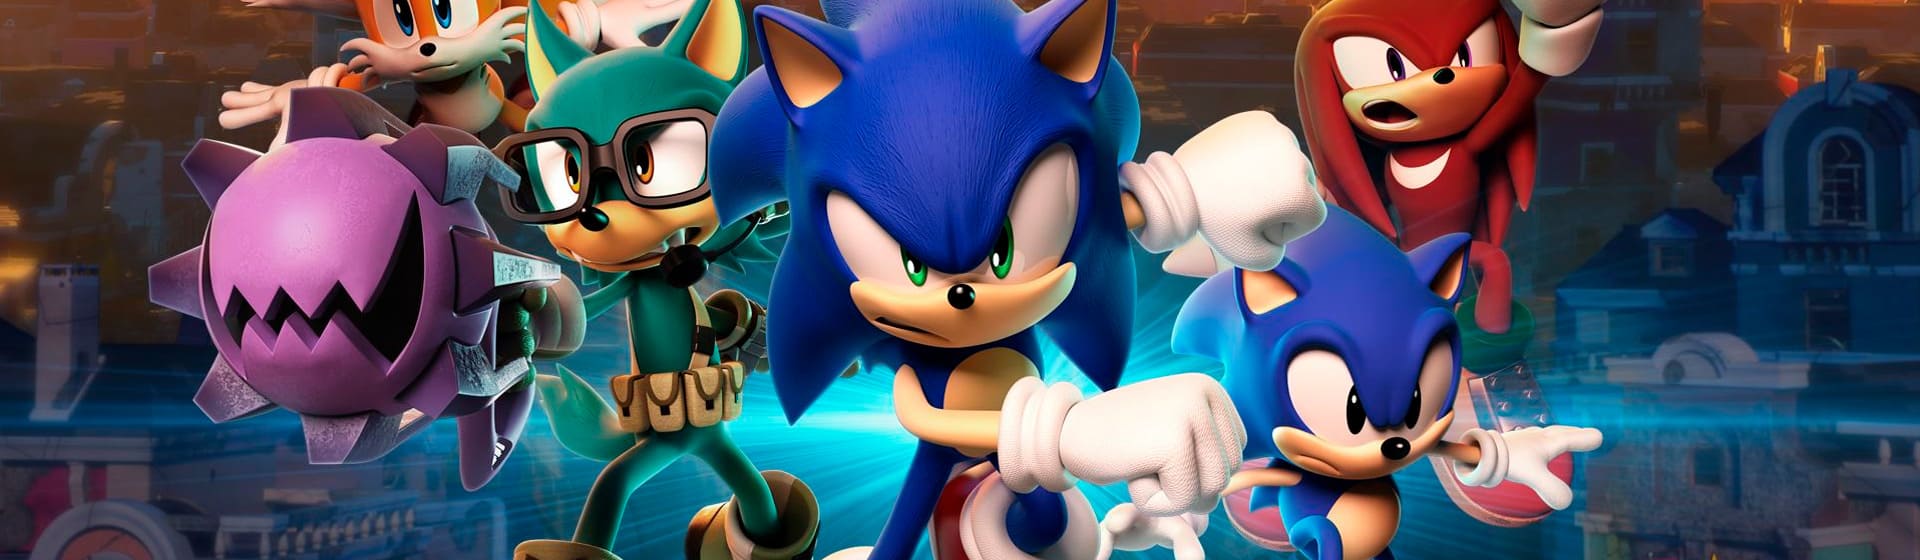 Sonic the Hedgehog - Мерч и одежда с атрибутикой